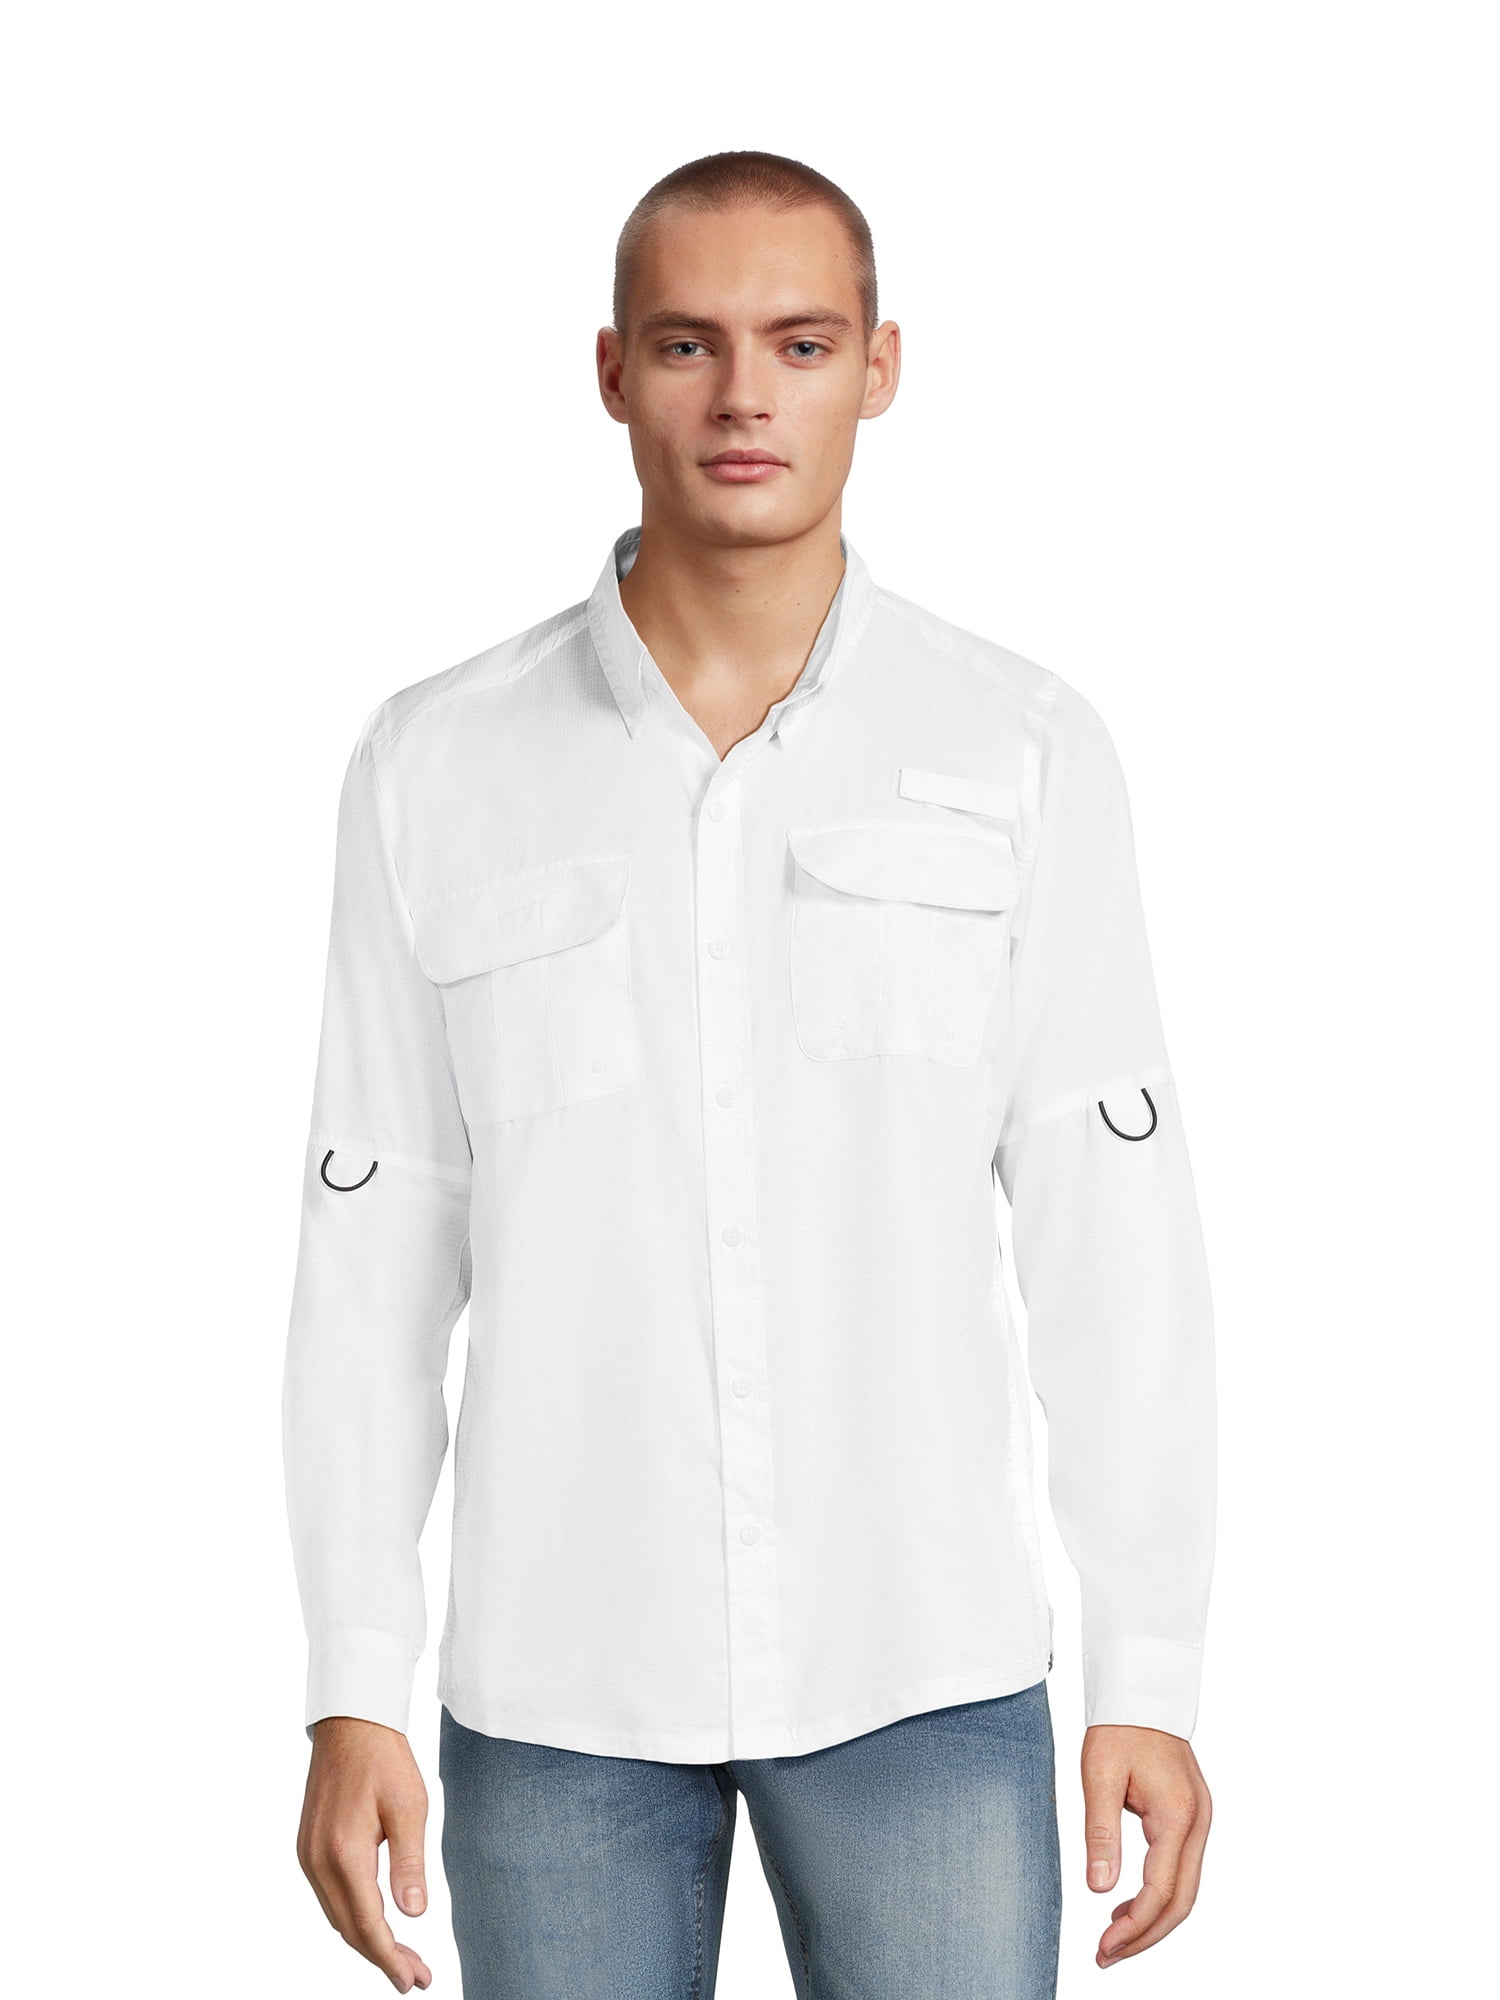 Burnside Men's Long Sleeve Utility Fishing Shirt, Sizes M-2XL 